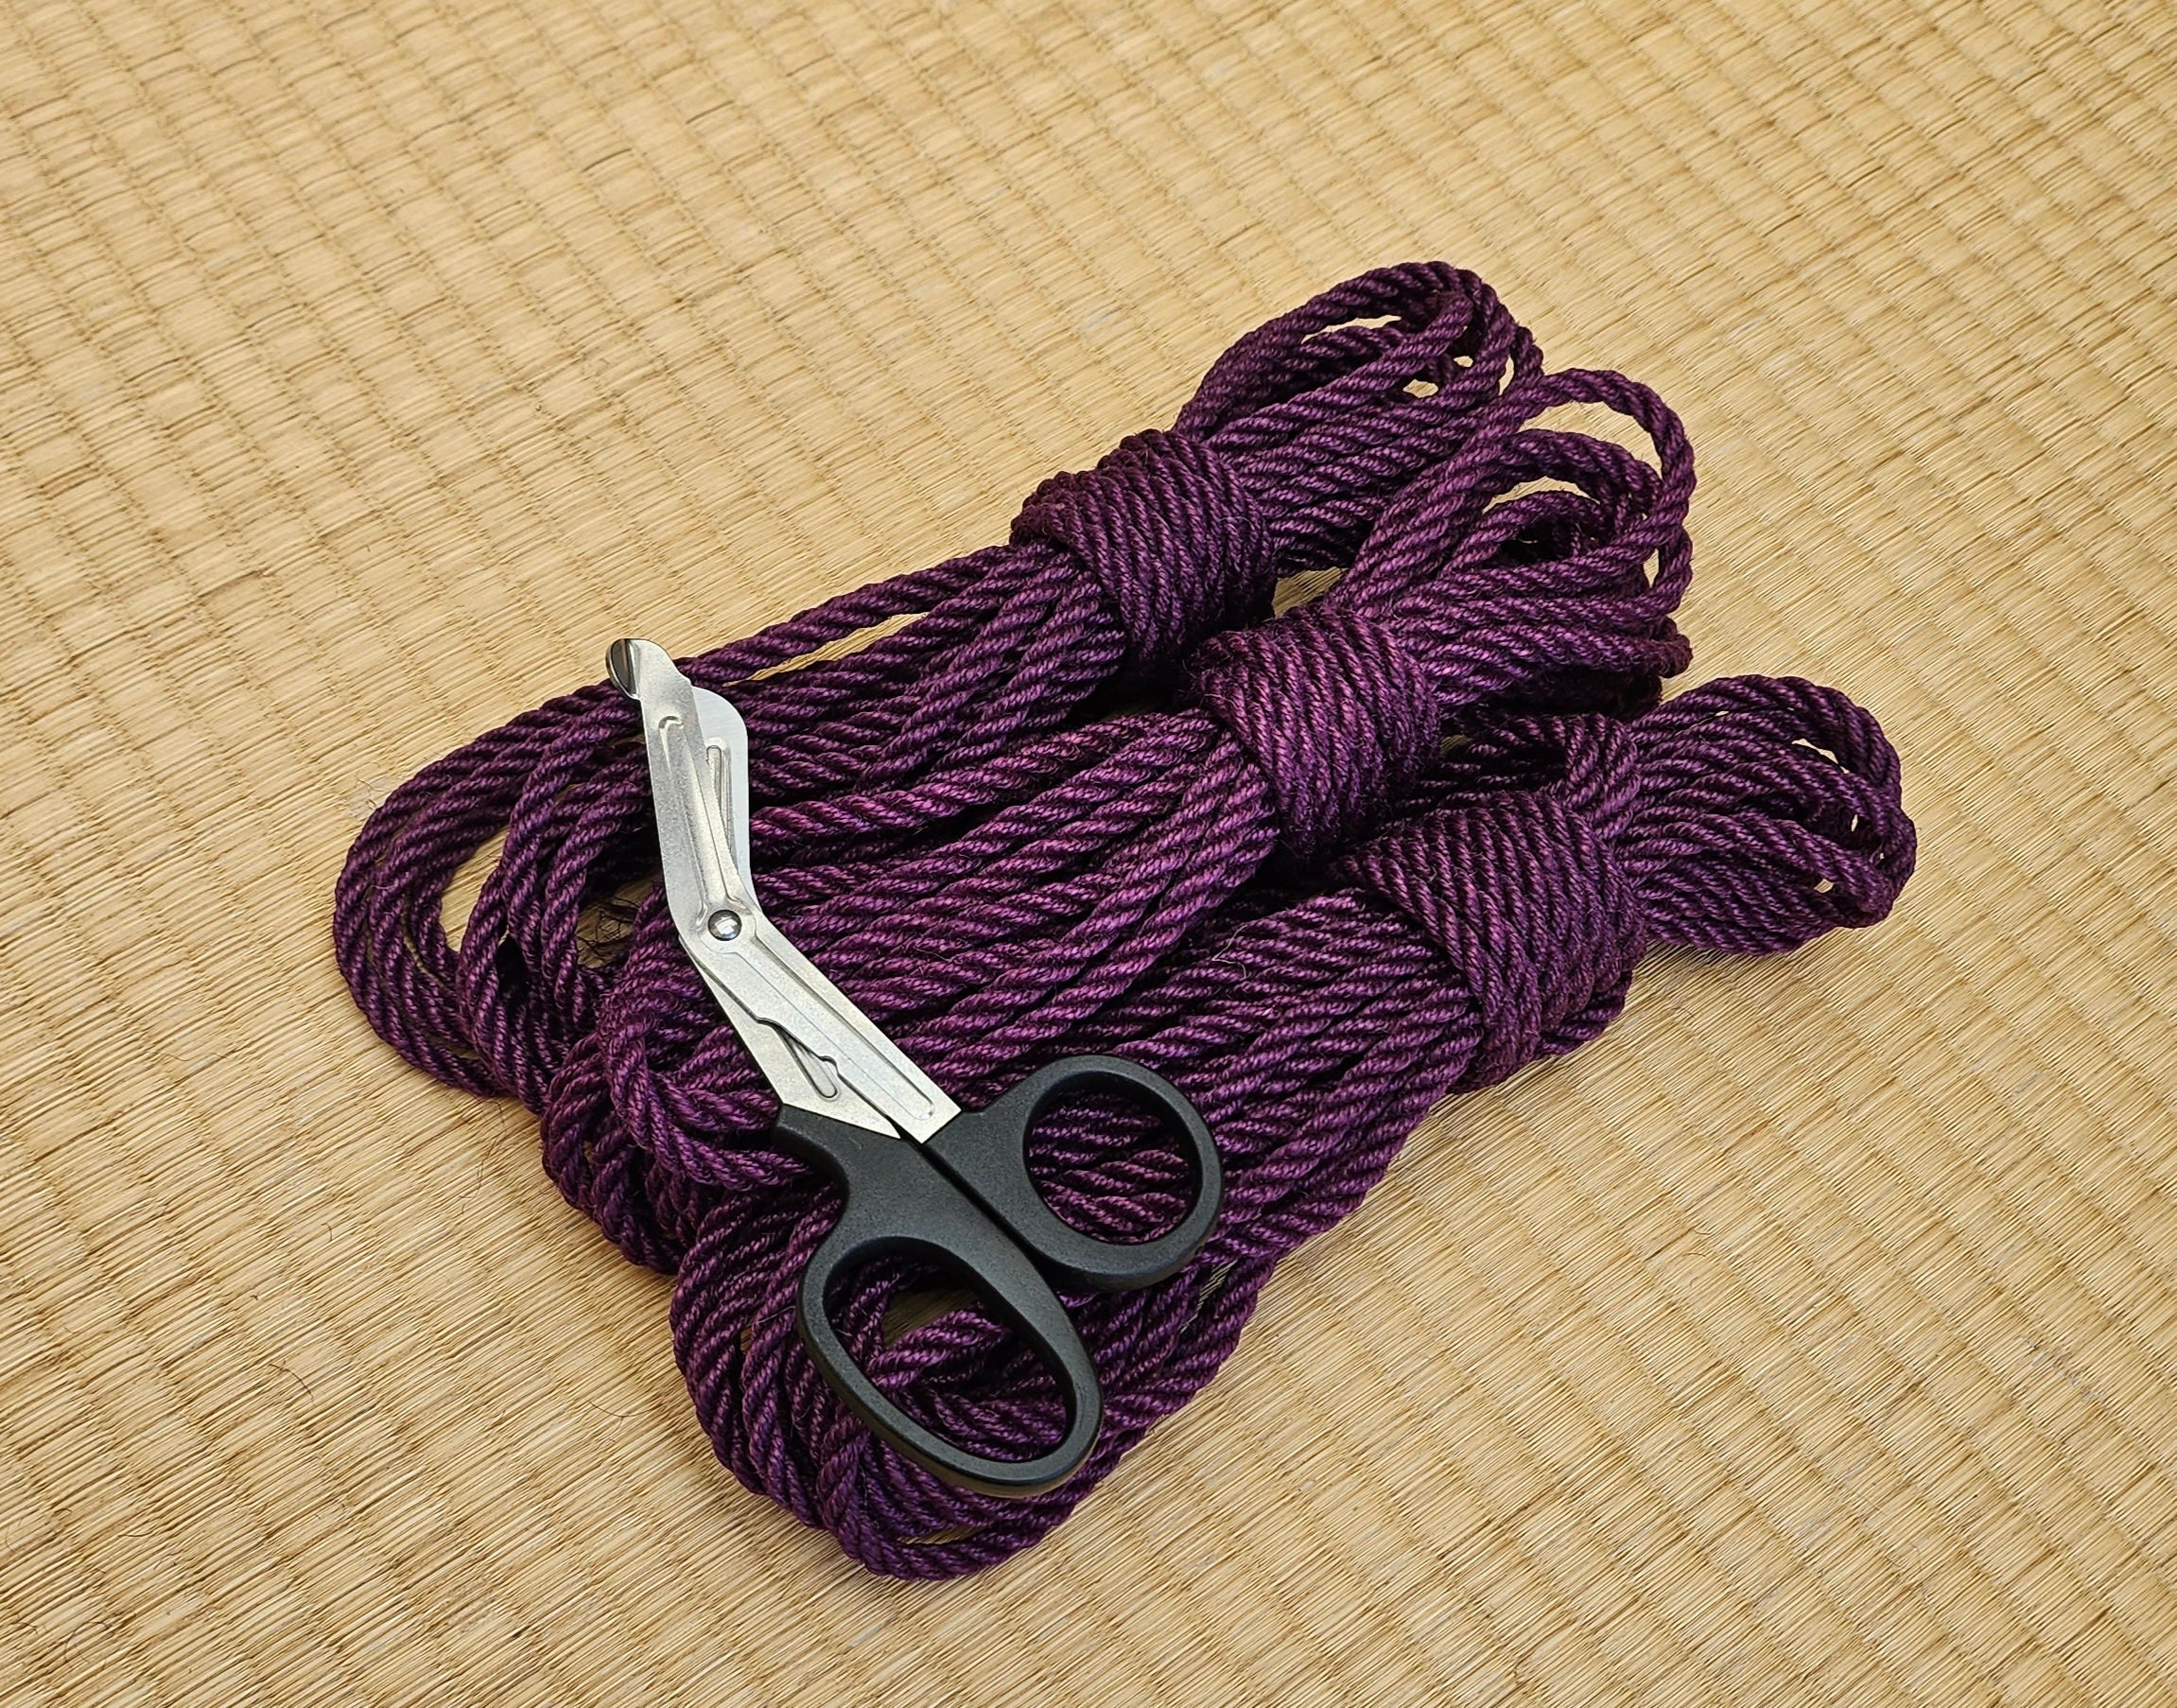 Dark blue dyed jute rope, shibari, single yarn, 6mm x 8m (26.25ft)